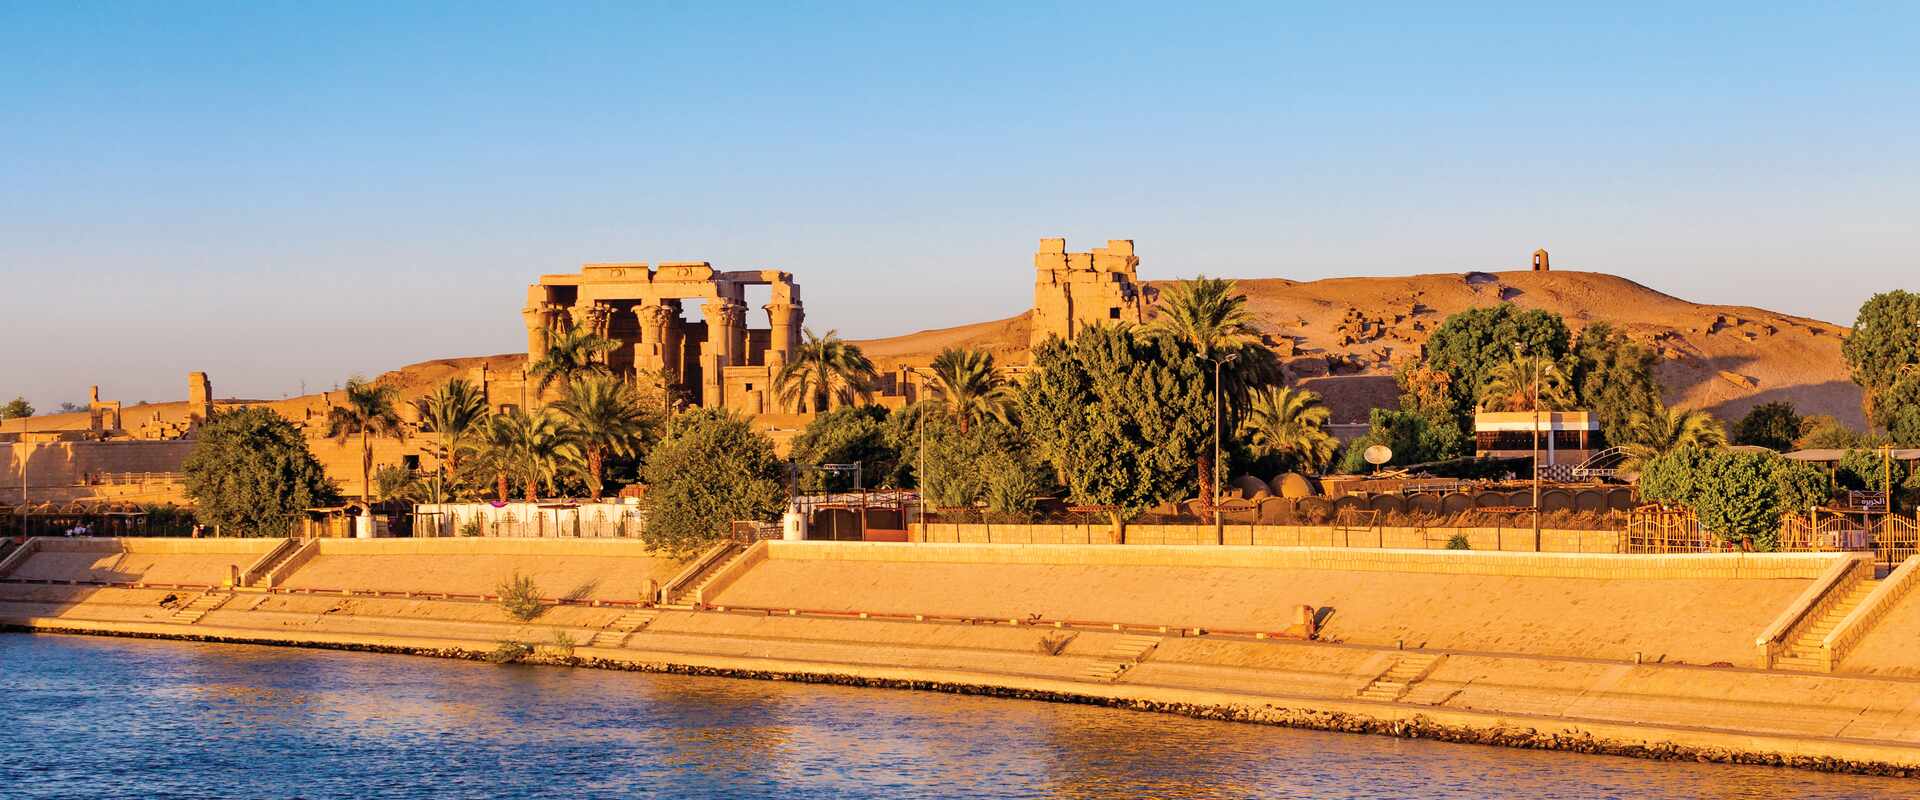 Temple of Kom Ombo along the Nile River, Egypt